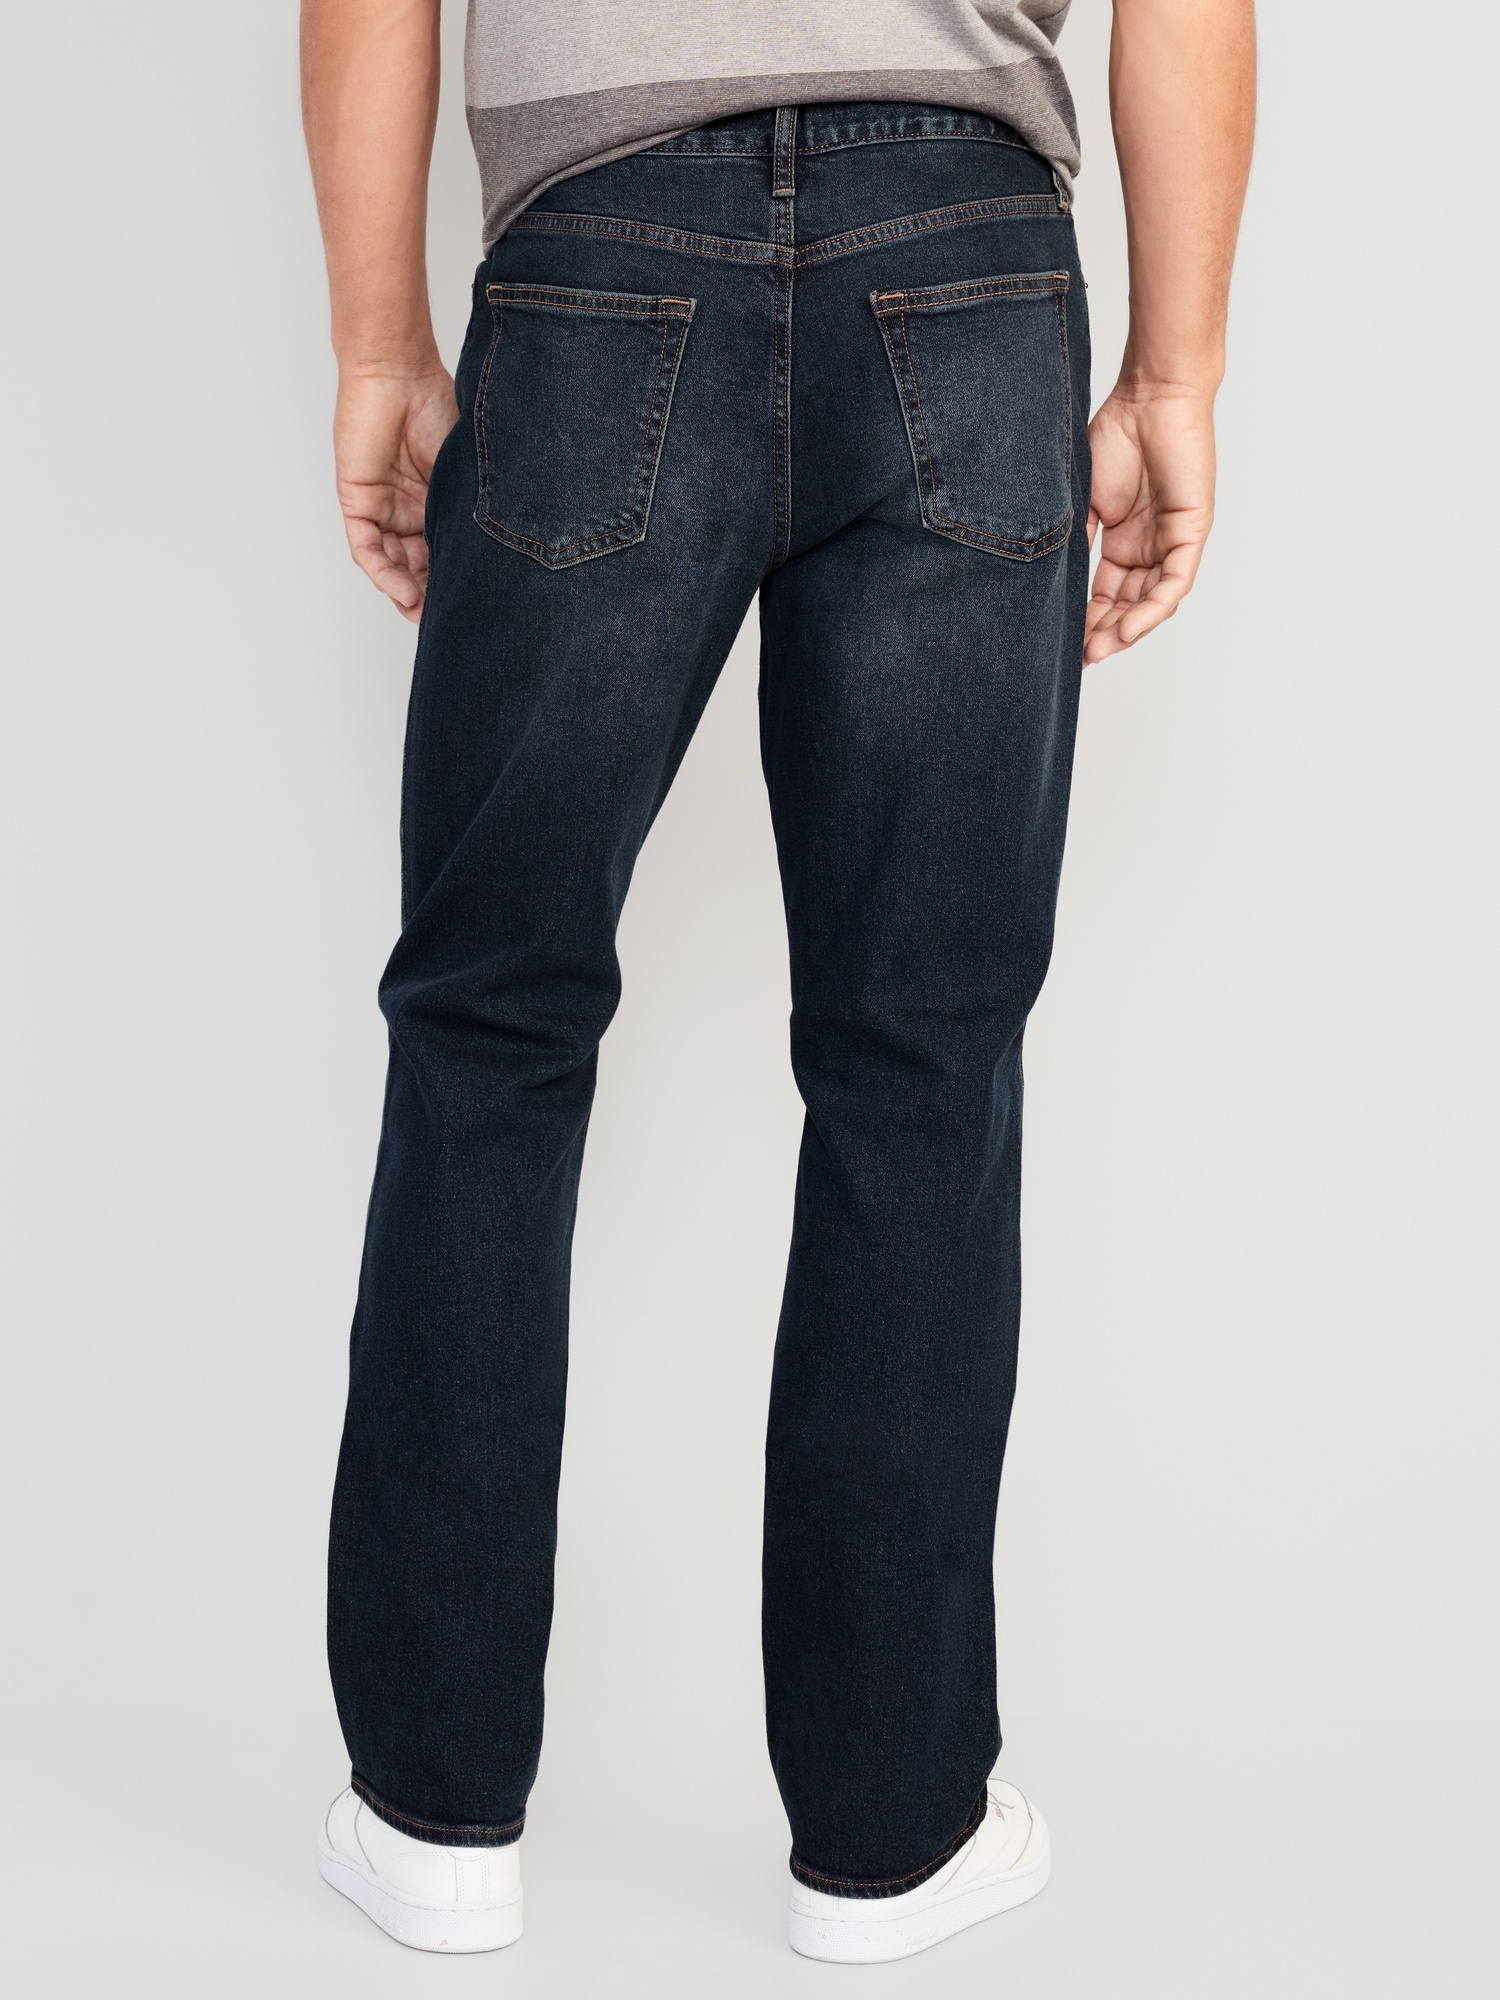 Straight Built-In Flex Jeans for Men | Old Navy